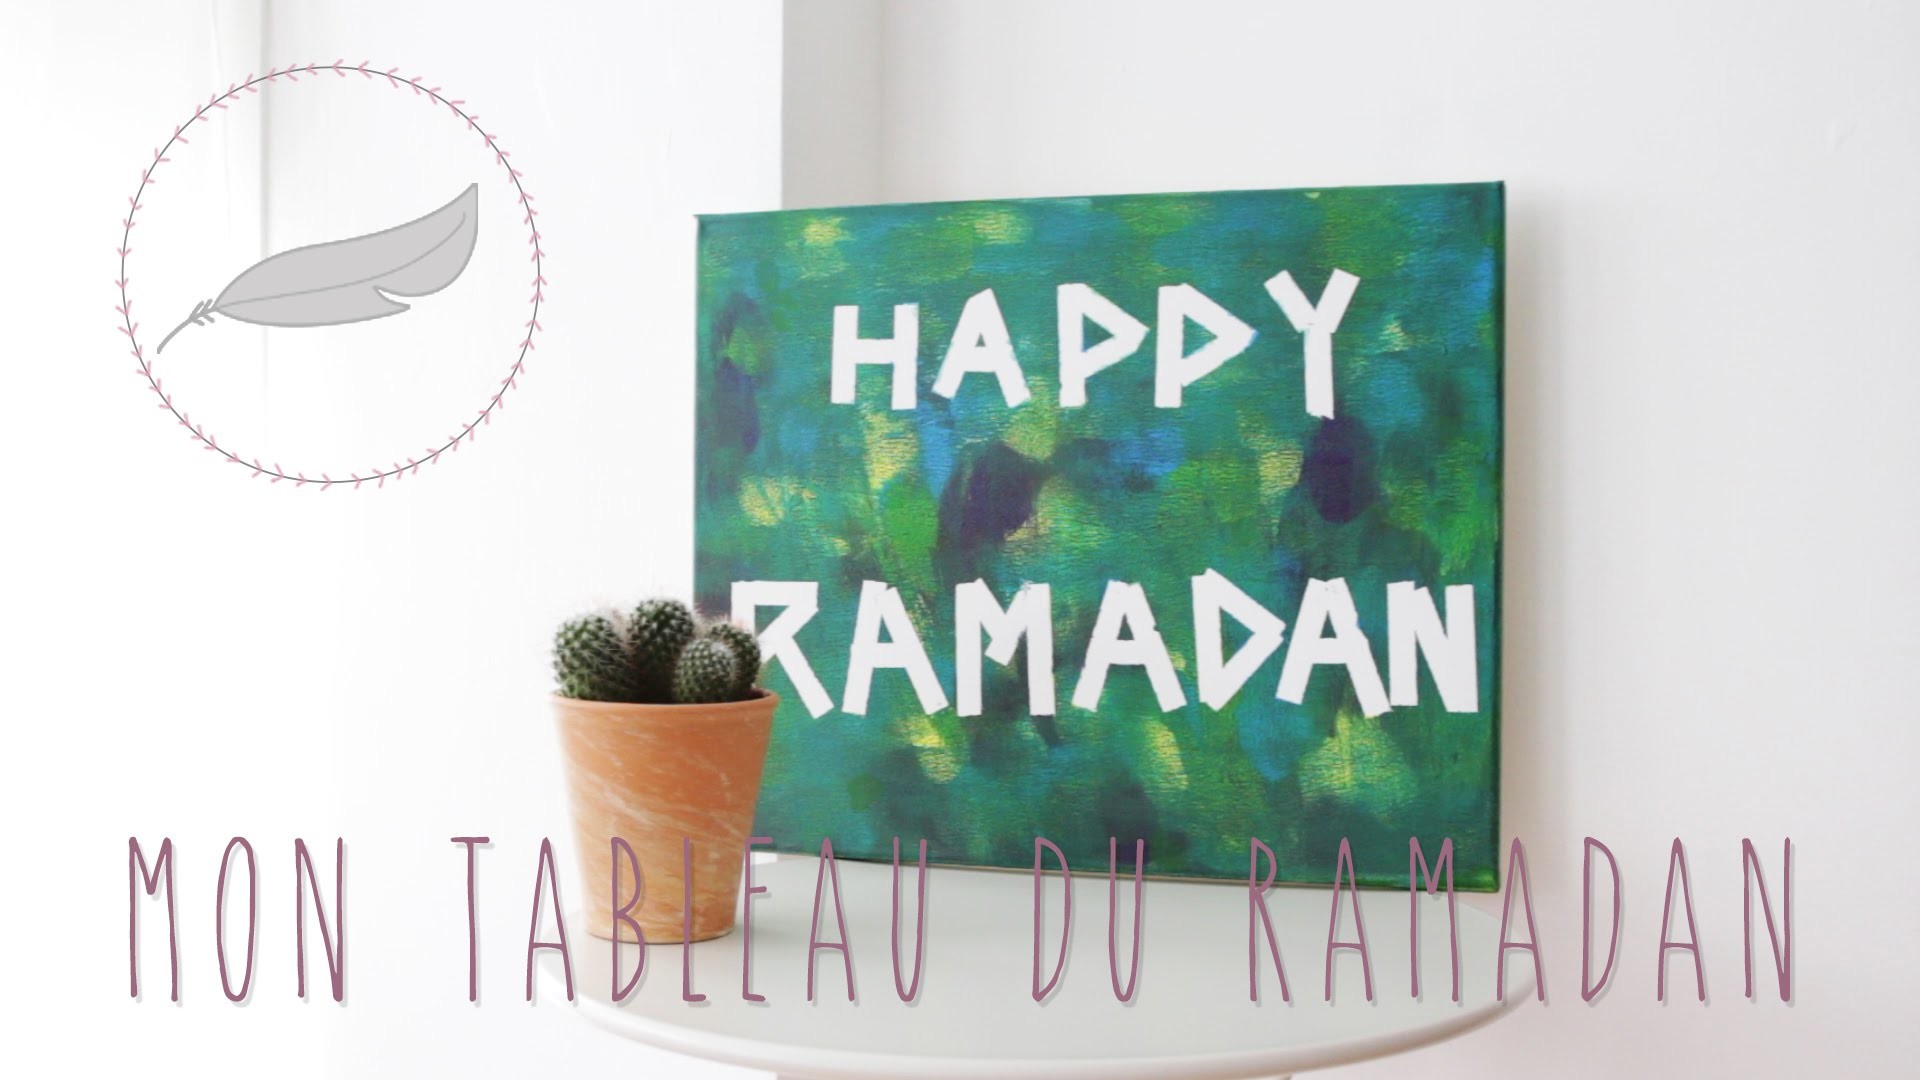 DIY Mon Tableau du Ramadan. Happy Ramadan!